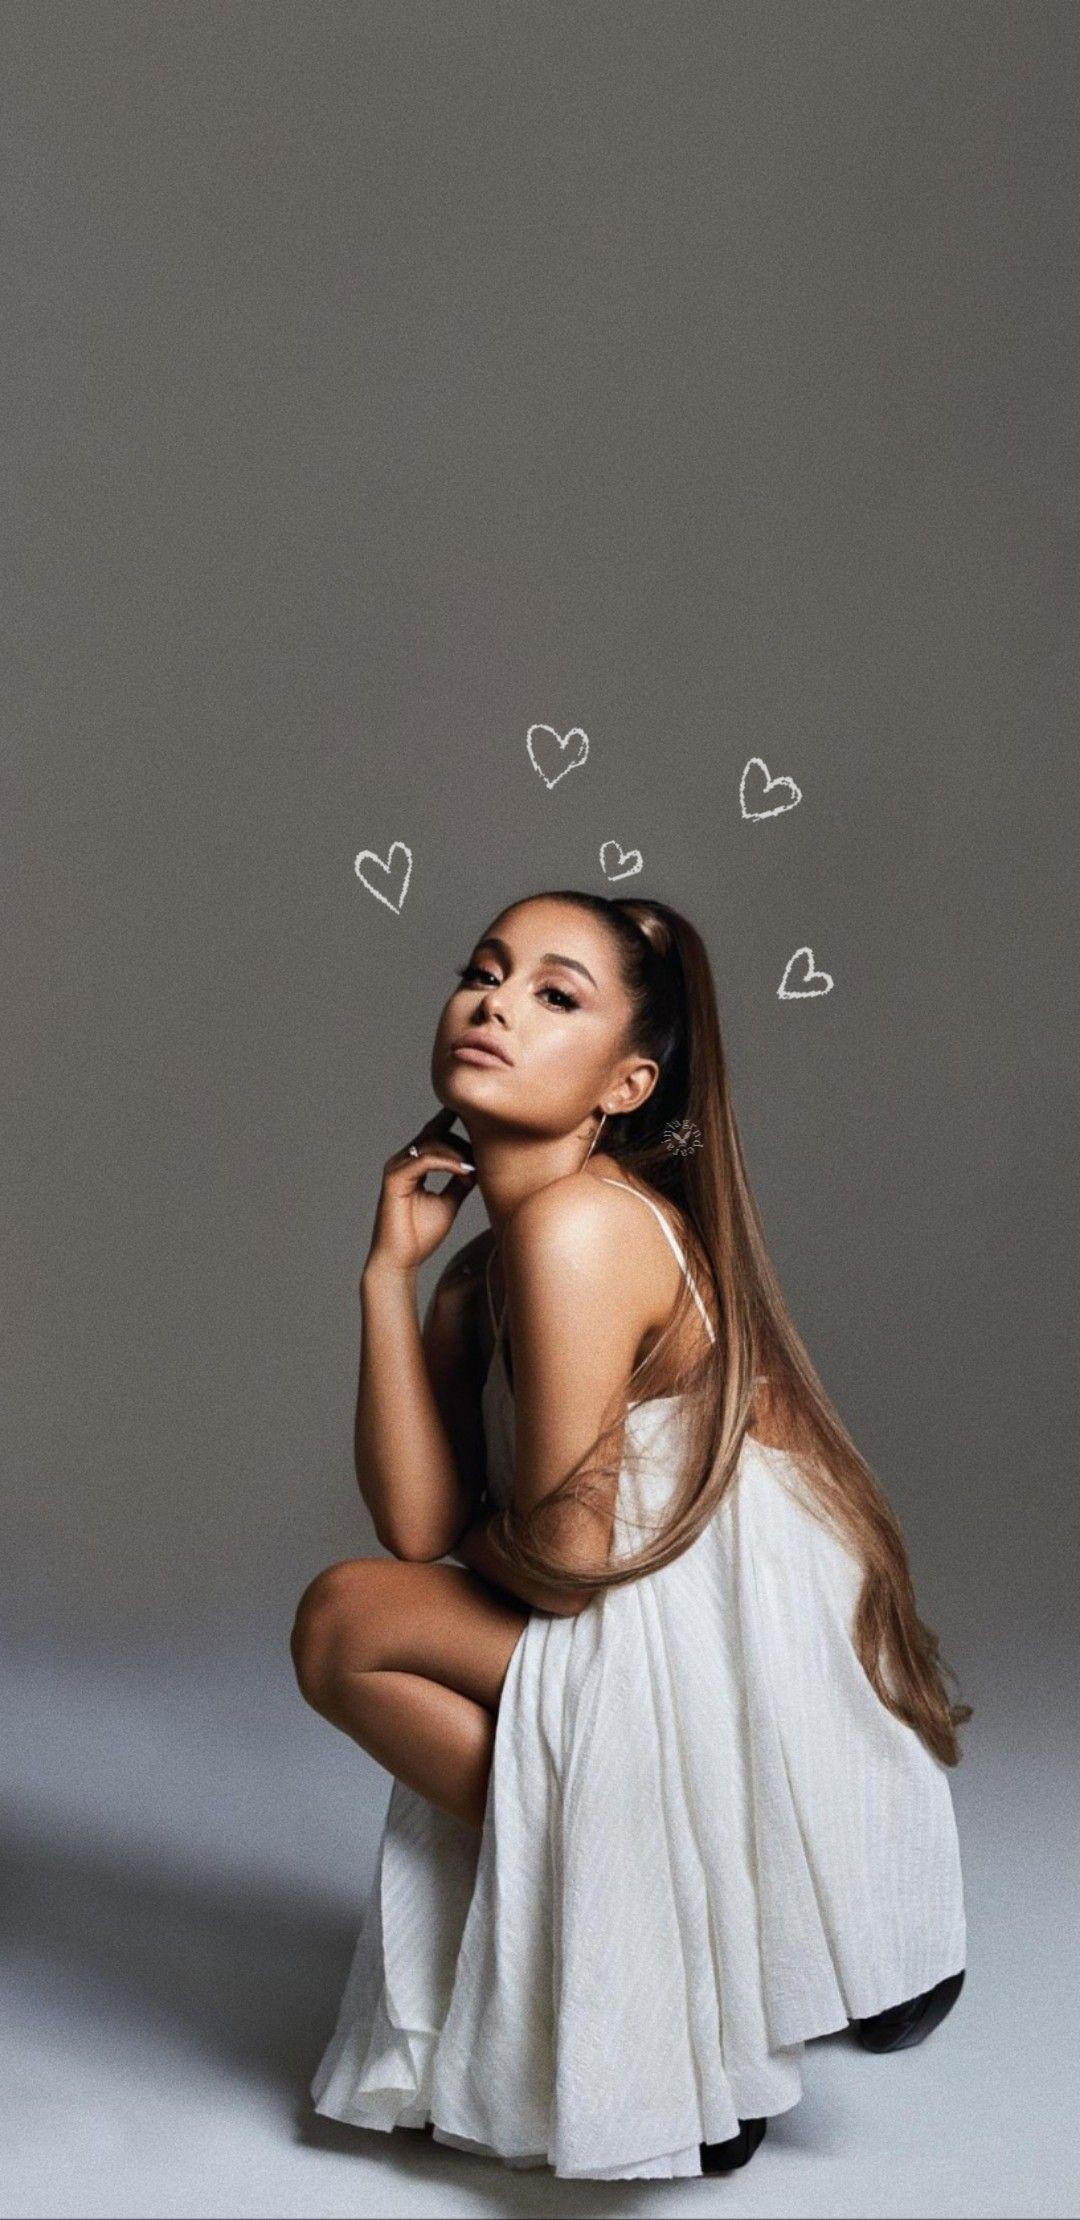 Ariana Grande Aesthetic Wallpaper Free Ariana Grande Aesthetic Background